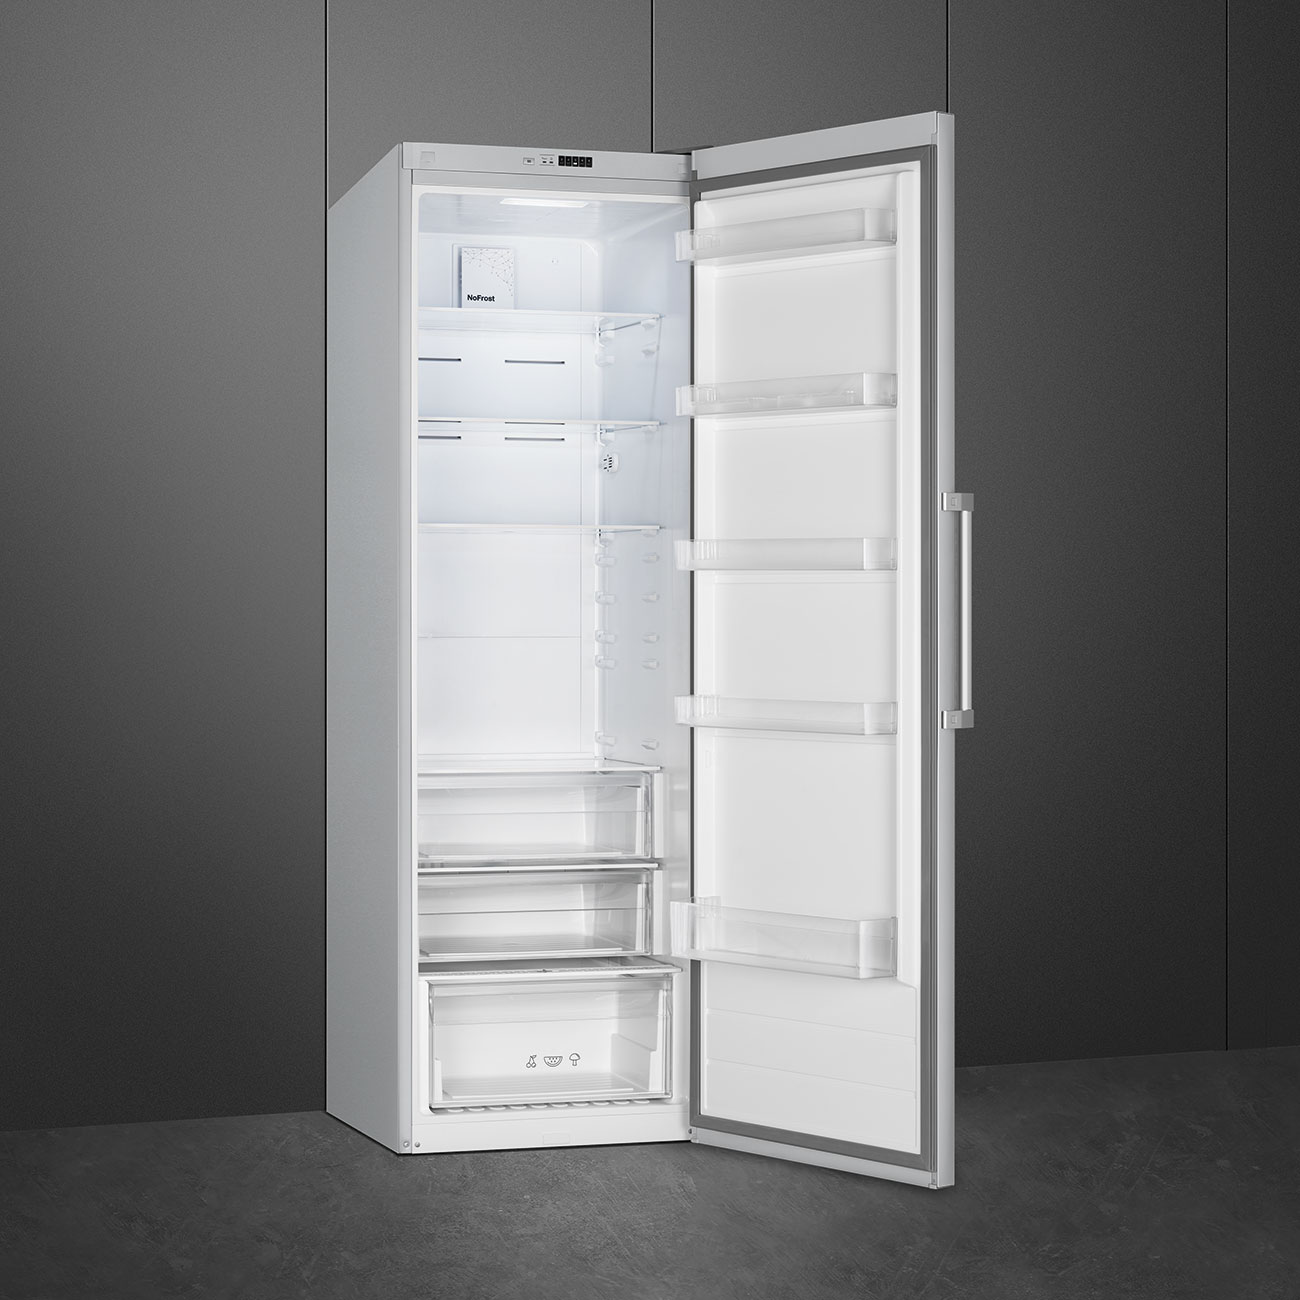 One Door Free standing refrigerator - Smeg_2